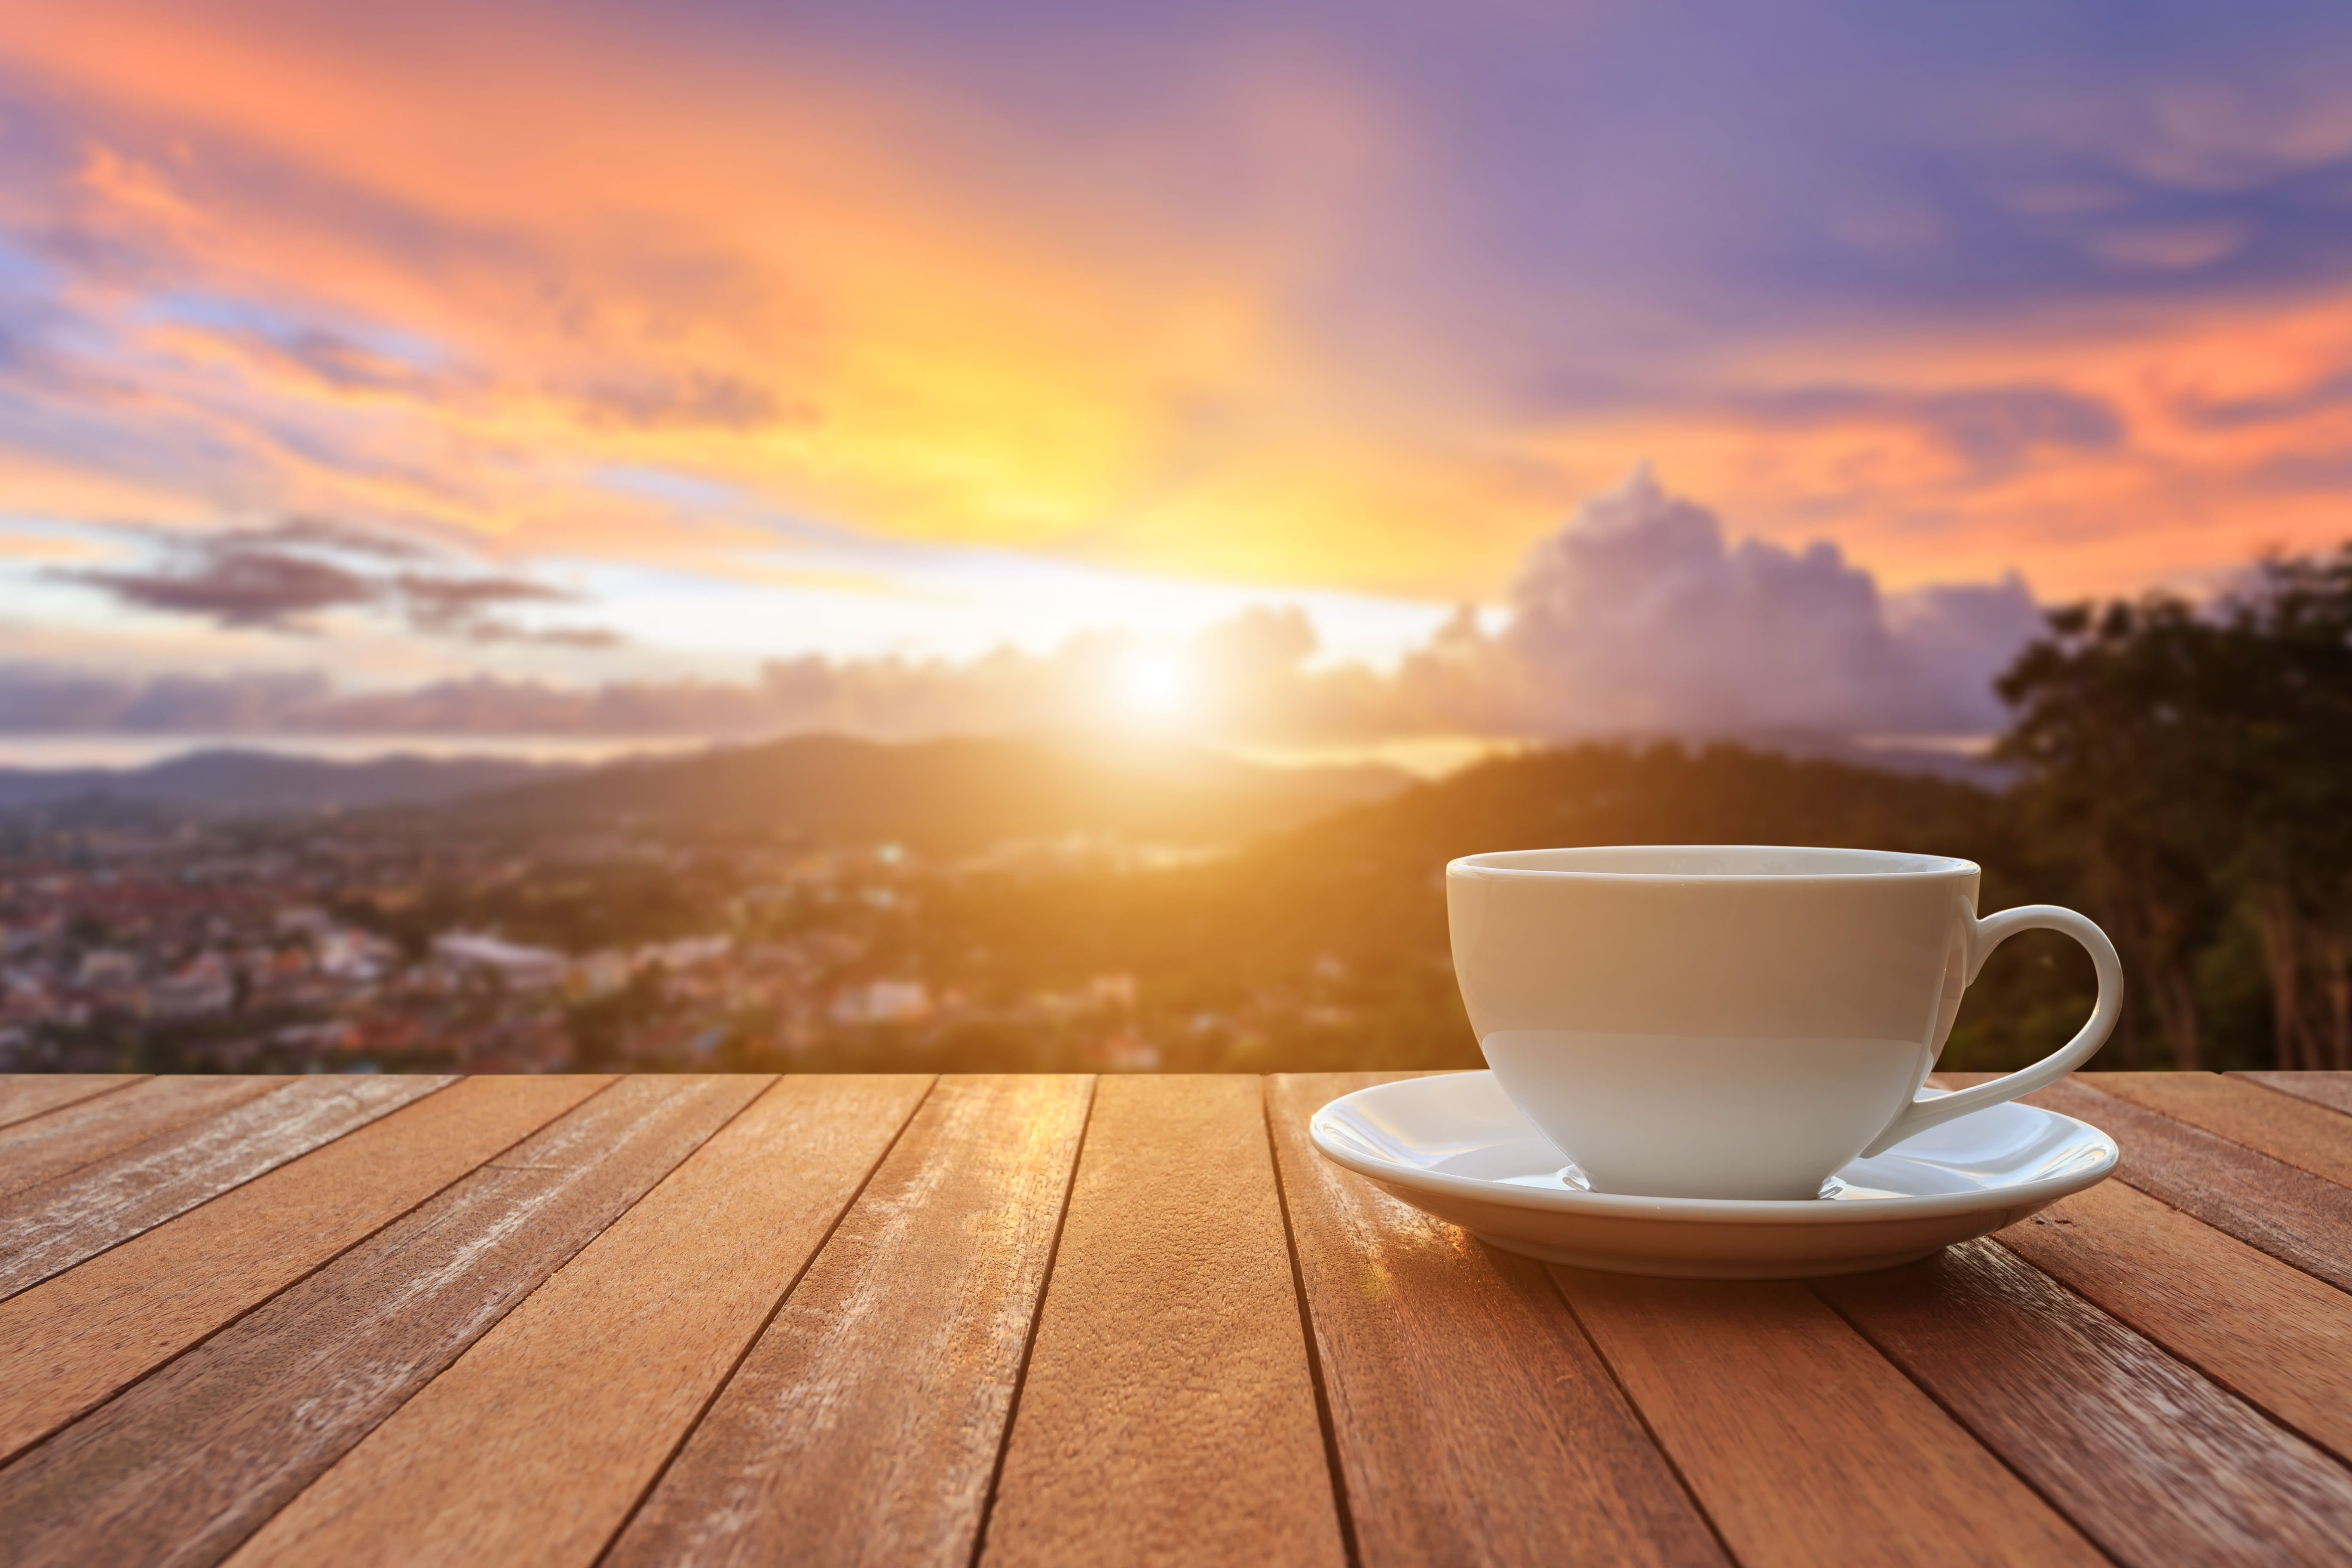 Утро снизу. Утро солнце чашка кофе. Утро кофе солнце. Доброе утро рассвет. Утренний кофе на рассвете.